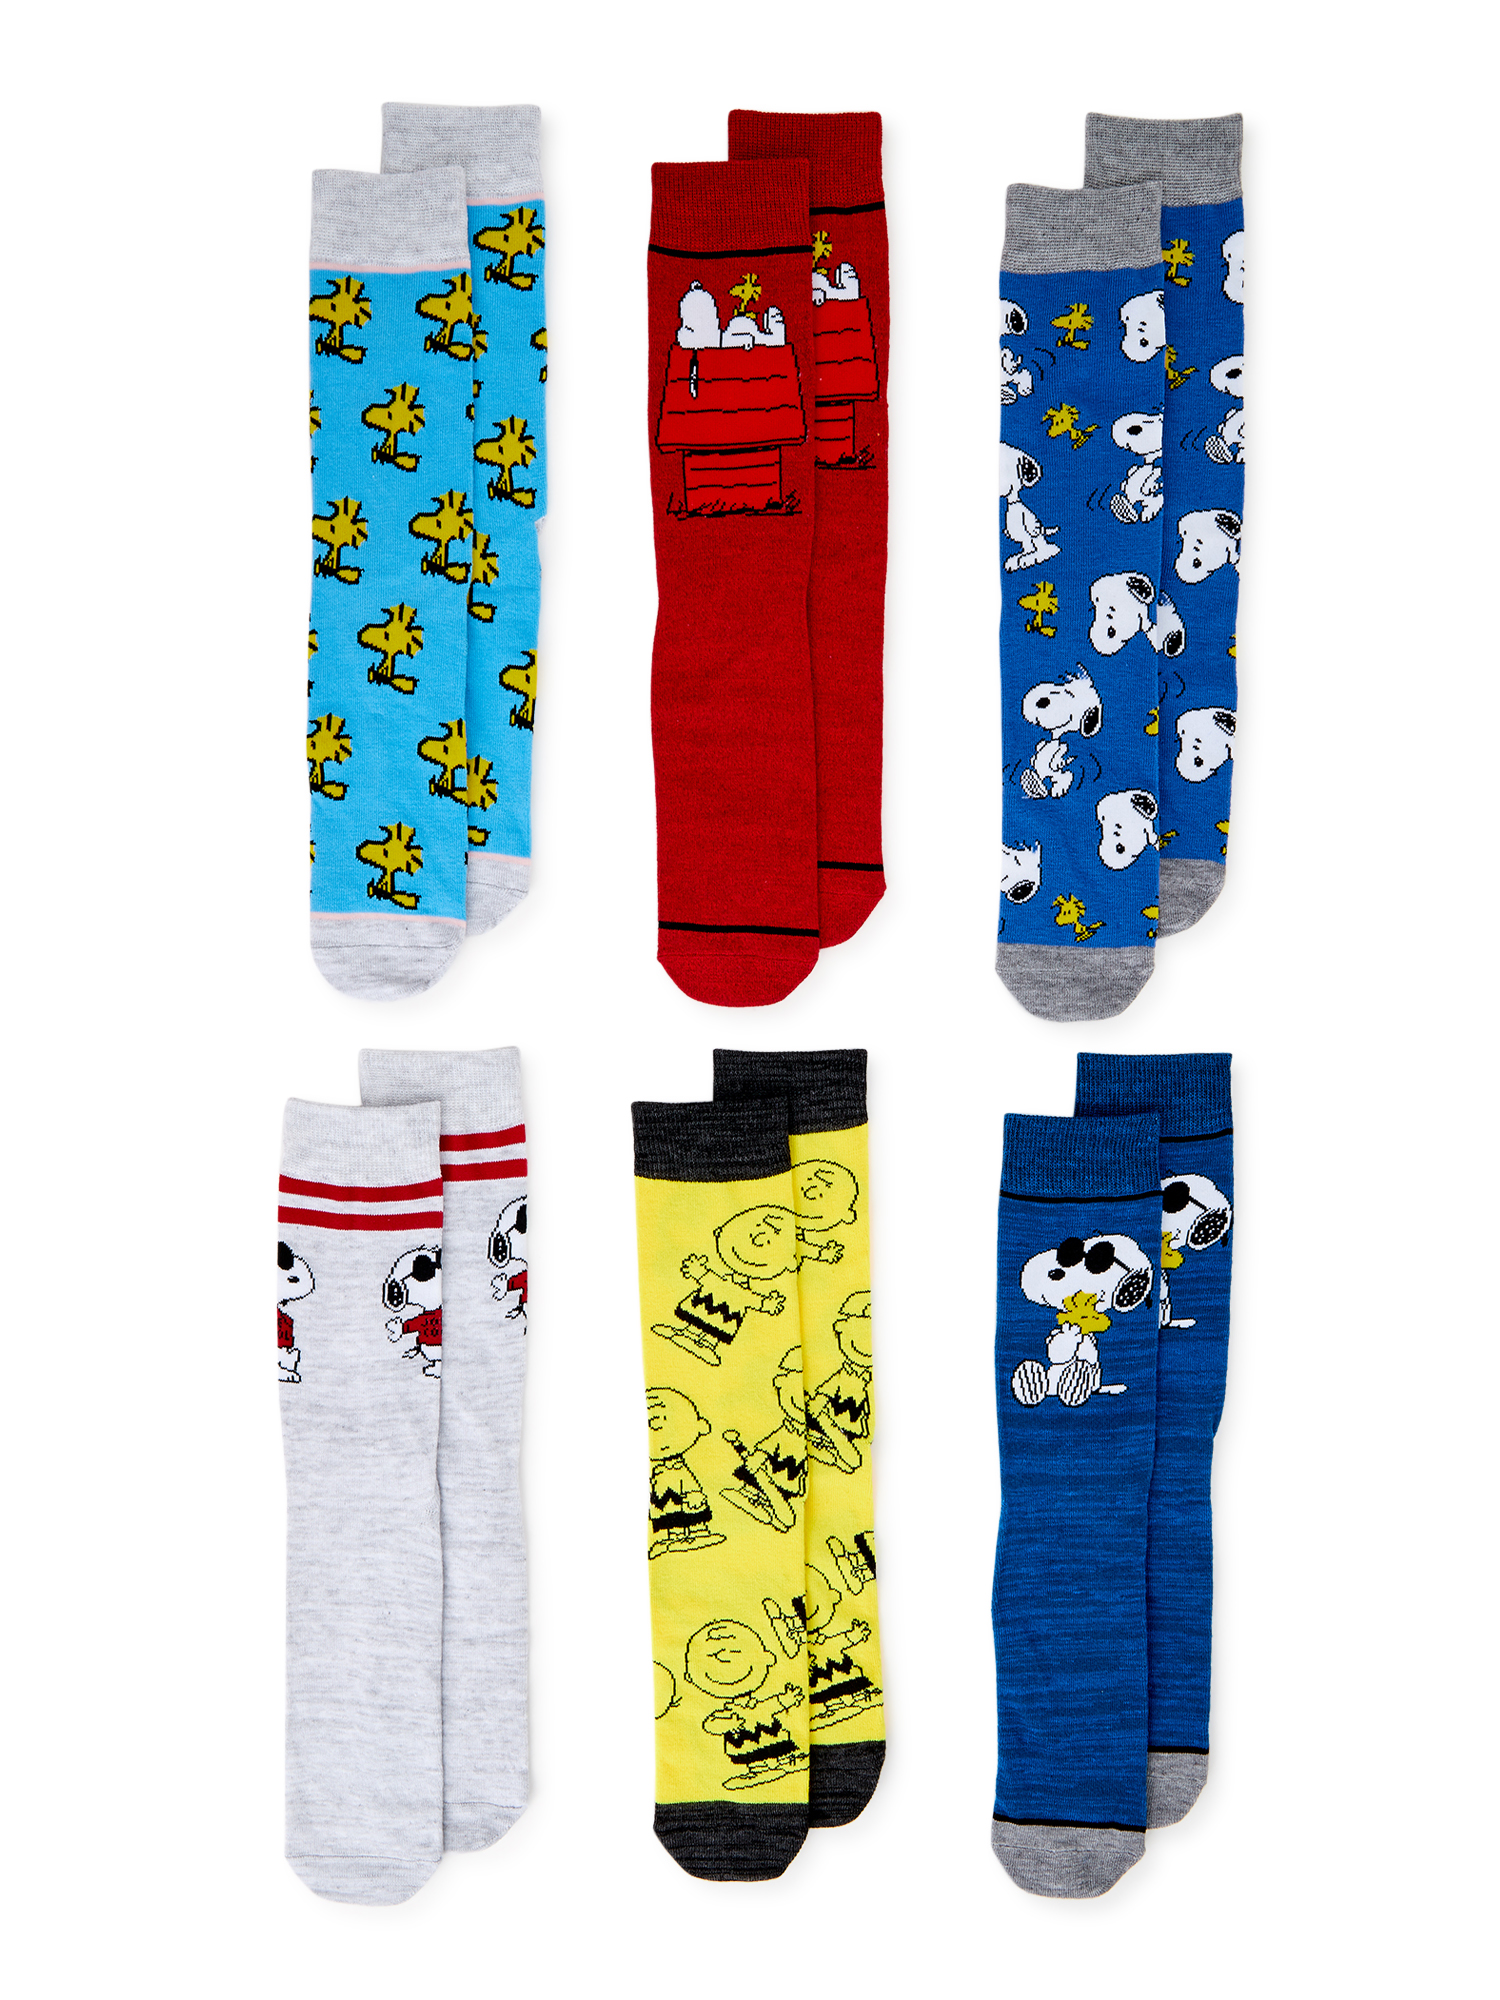 Peanuts Snoopy Men’s Crew Socks, 6-Pack - image 1 of 2